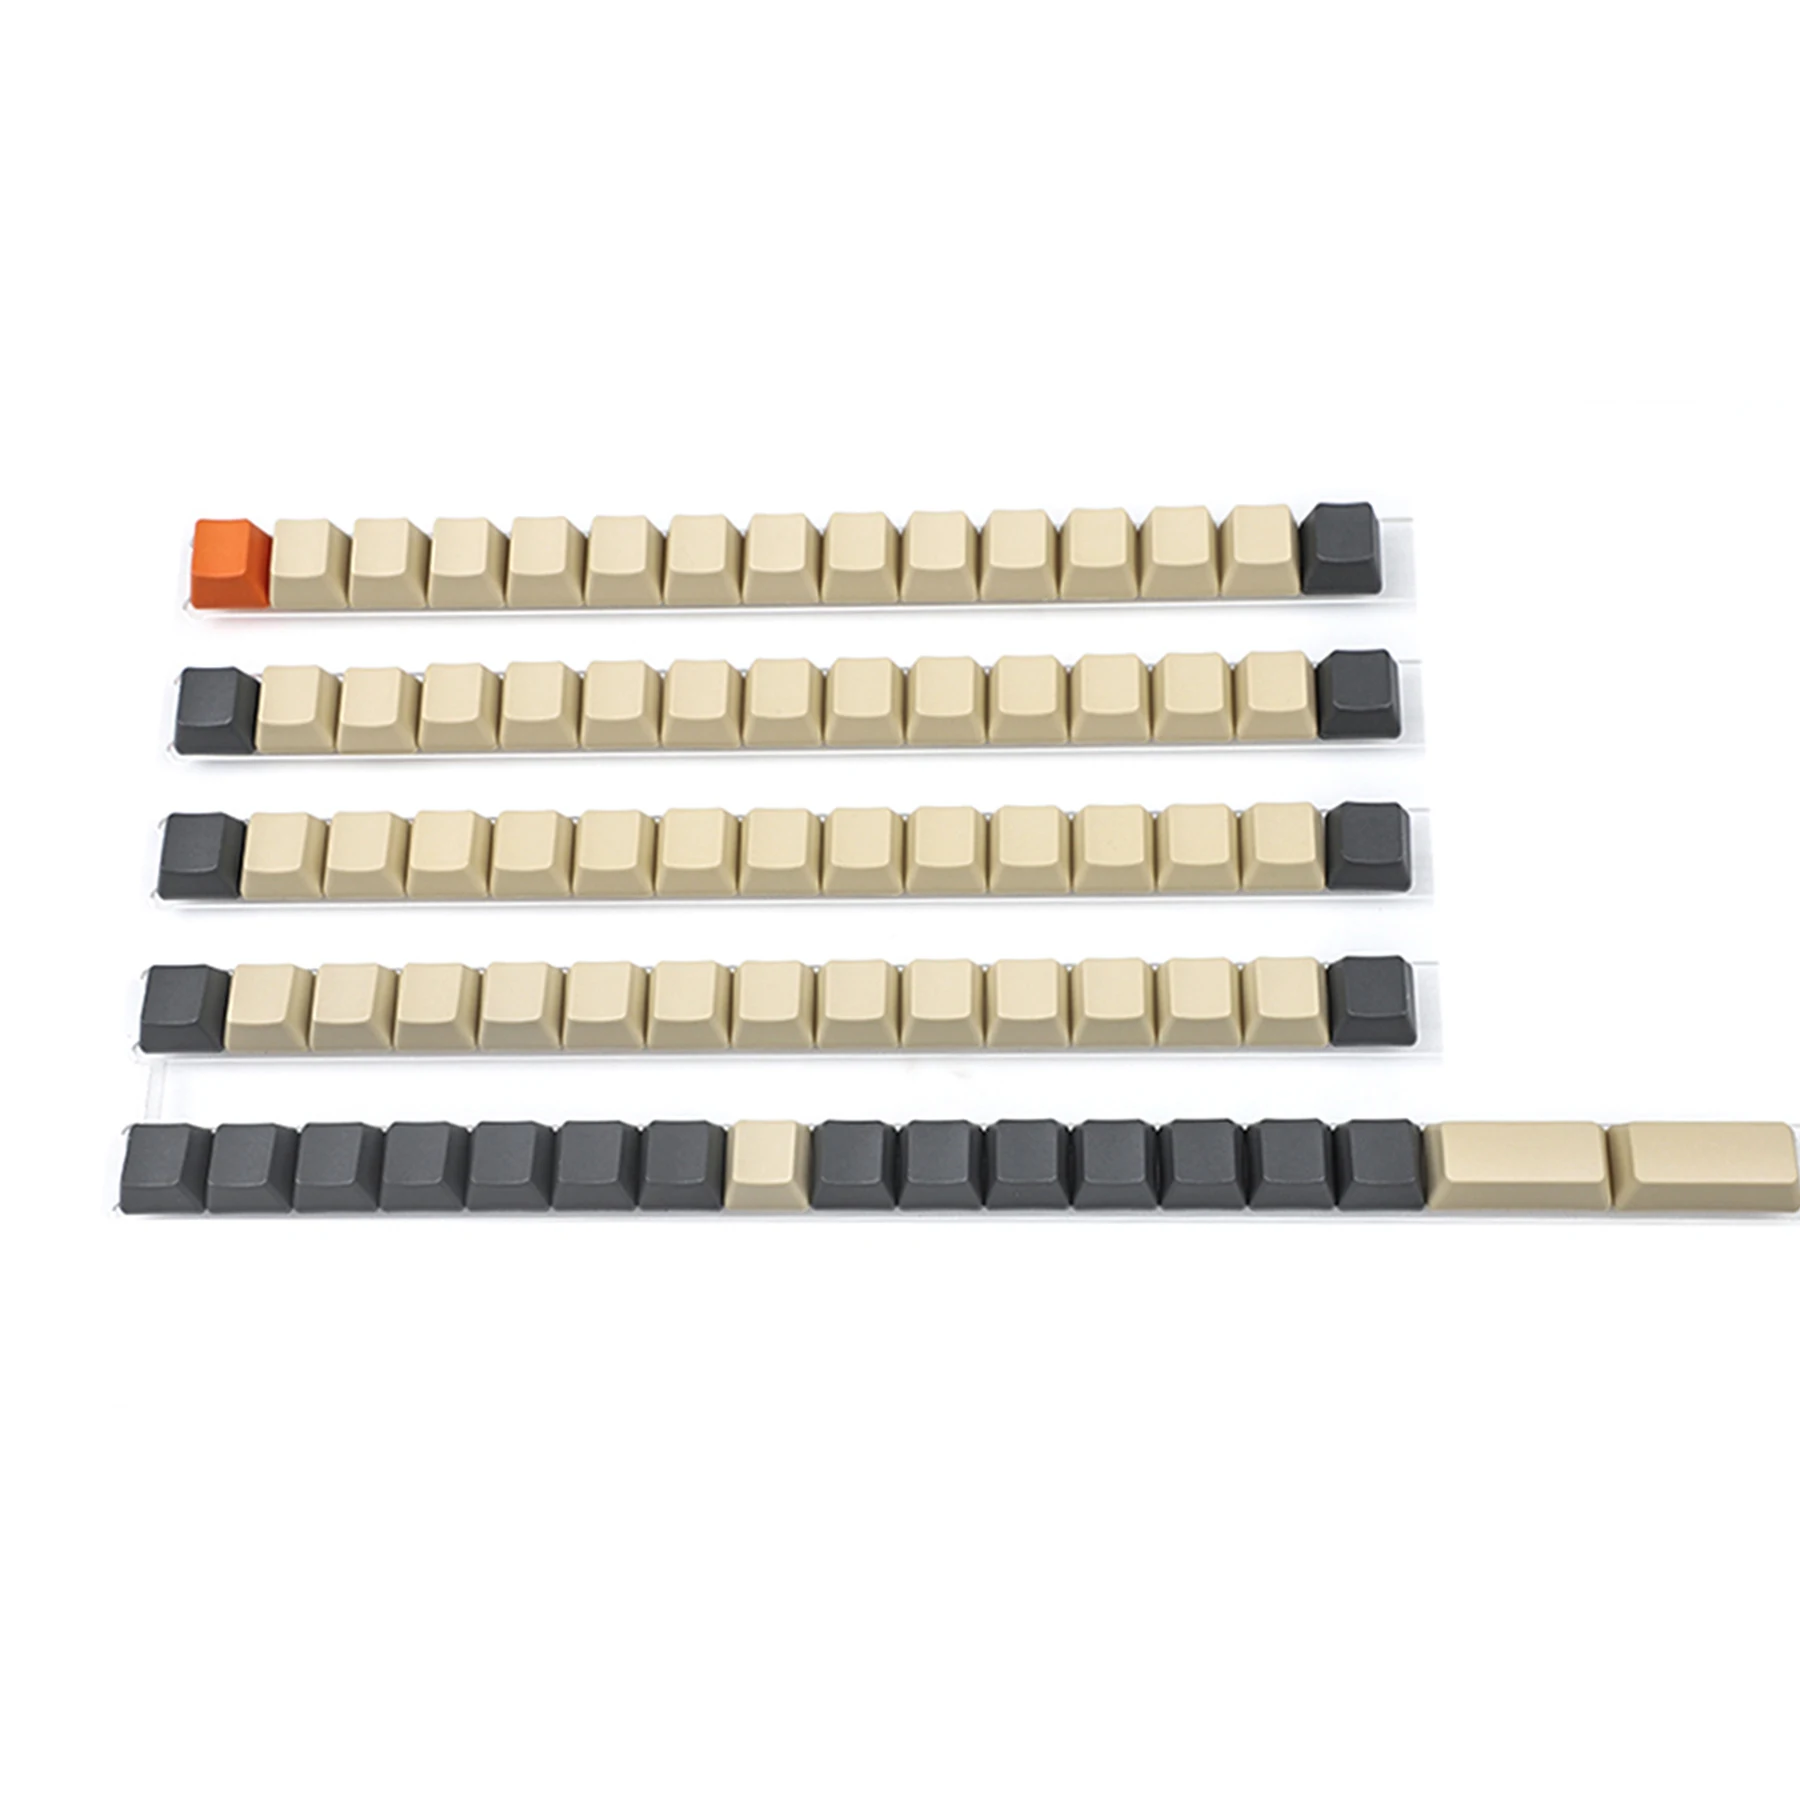 

OEM Profile 75 Key Blank PBT Ortholinear Layout Keycaps For Mechanical Keyboard XD75 ID75 Planck Preonic Niu40 YMD40v2 40% DIY